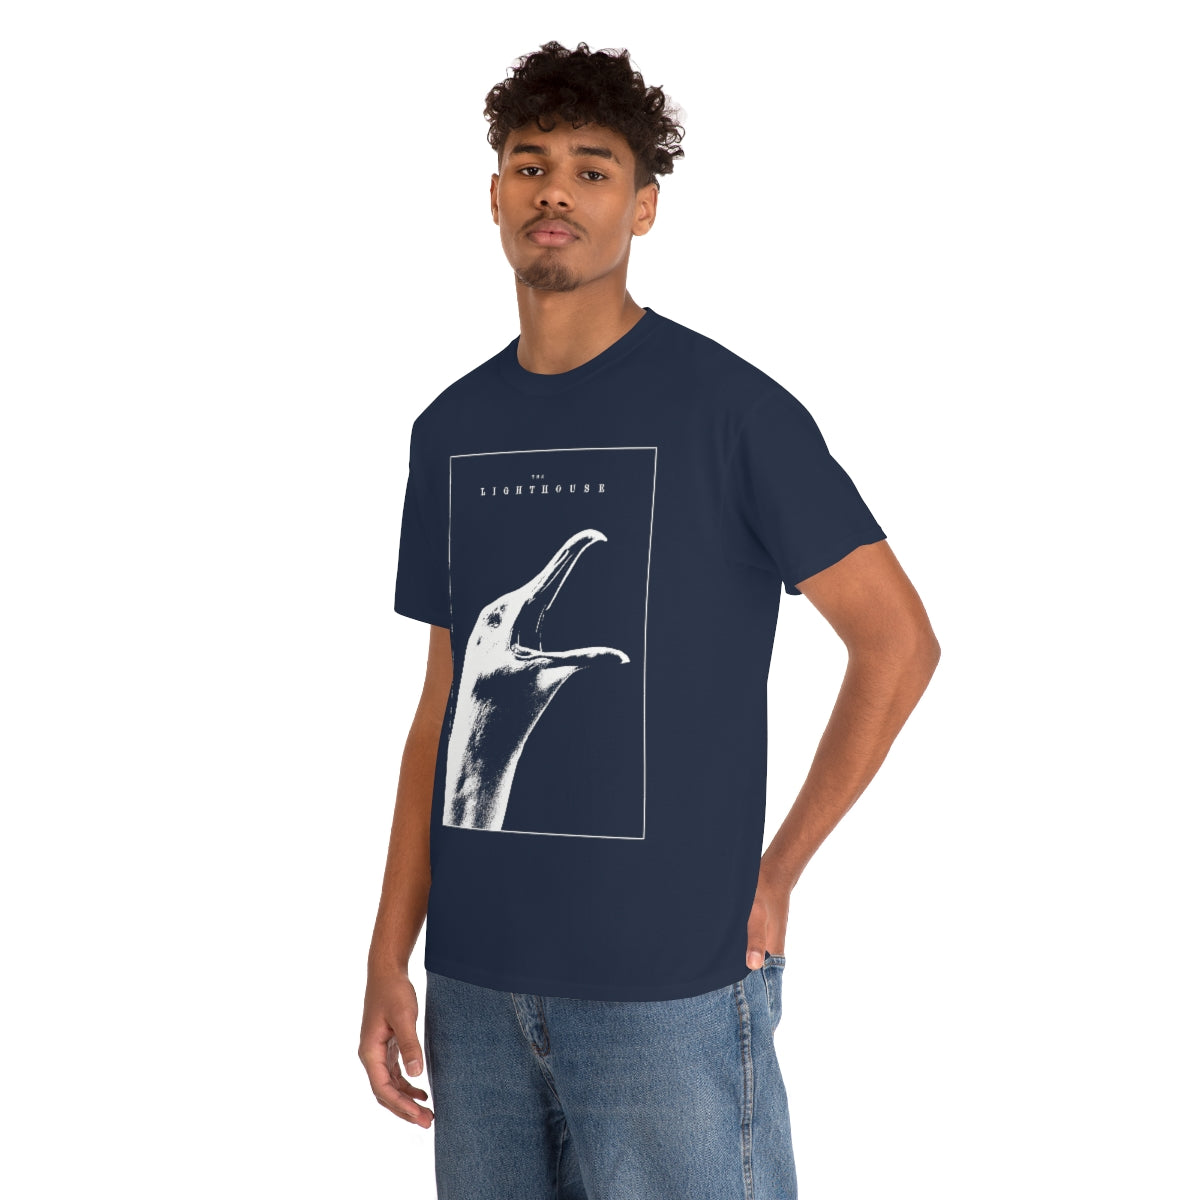 The Lighthouse T-Shirt